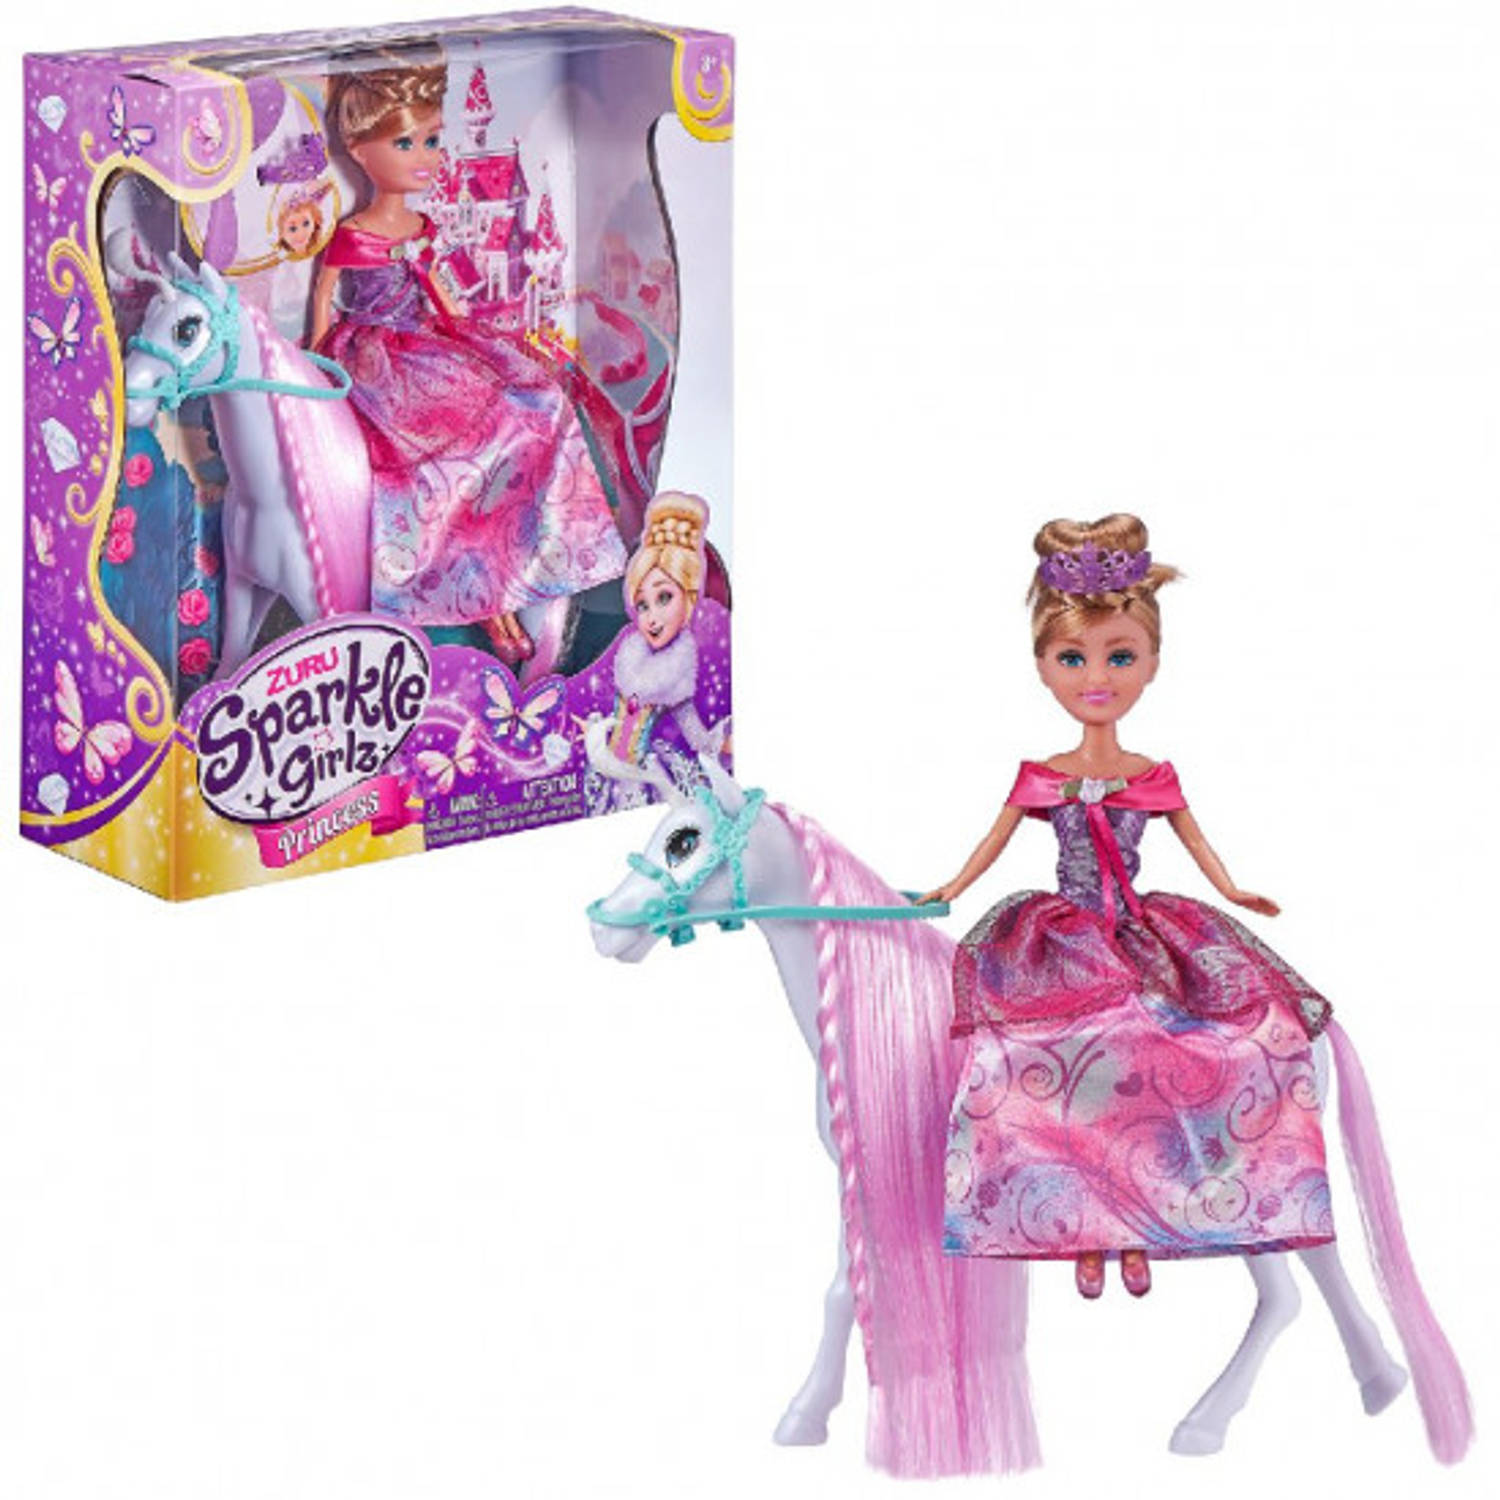 Sparkle Girlz Princess + Paard